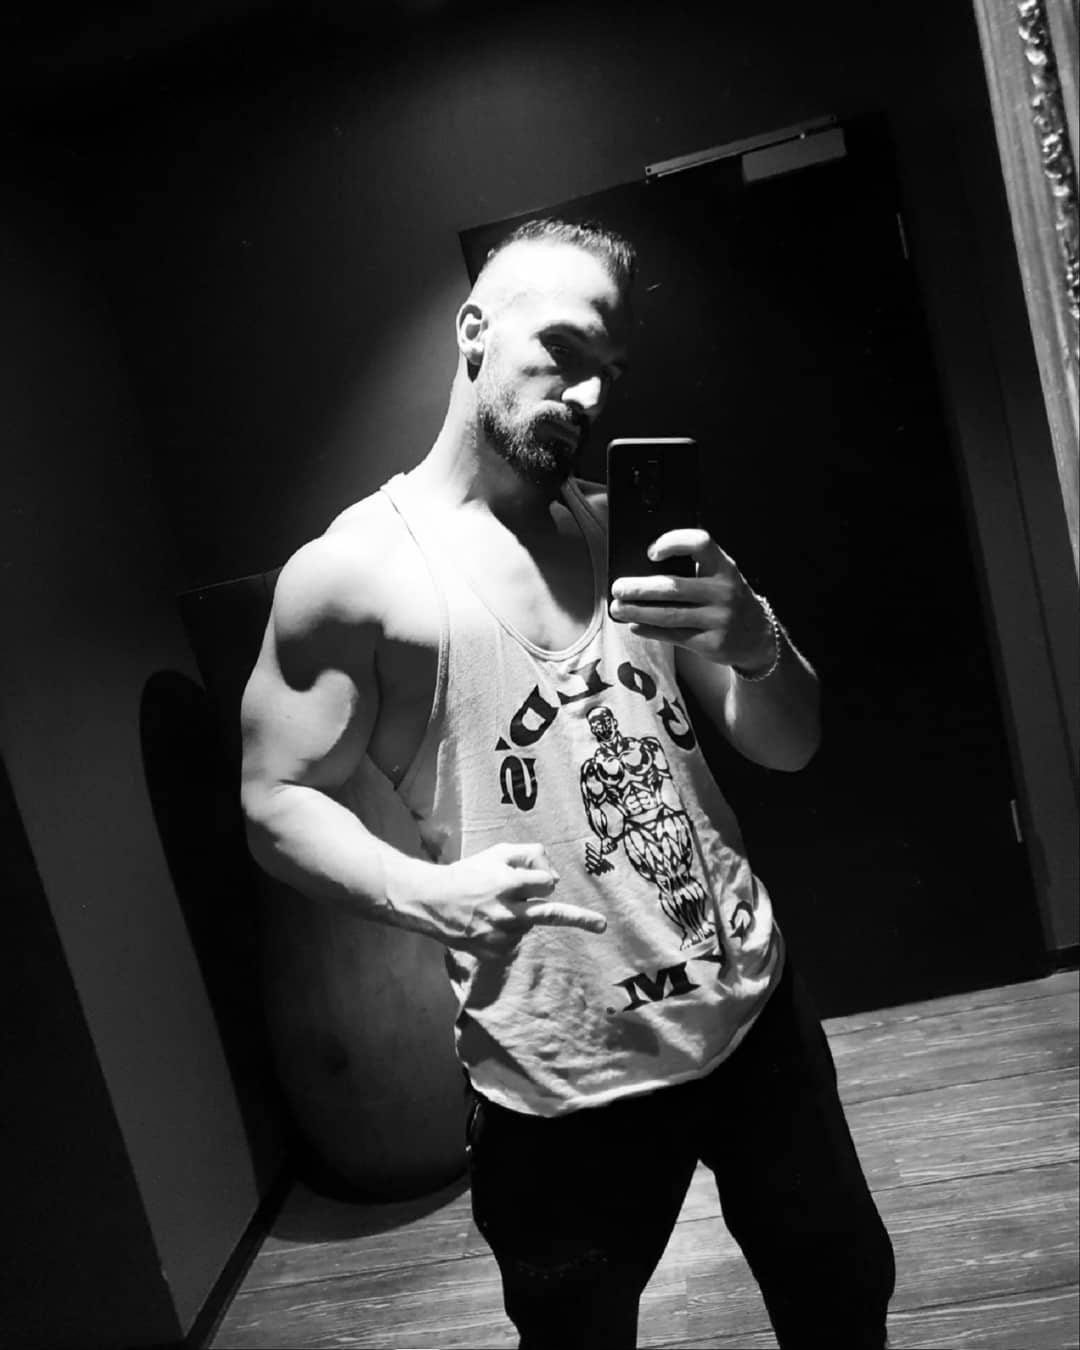 50 Shades of I don’t give a fuck
.
#bangboss #idontgiveafuck #fitness #pumpingiron #mcfit #mcfitberlin #johnreed #johnreedberlin #bodybuilding #gym #goldsgym #training #pump #muscles #biceps #amazing #selfie #me #instagood #instalike #instafit #instamood #50shadesofgrey #berlin #berliner